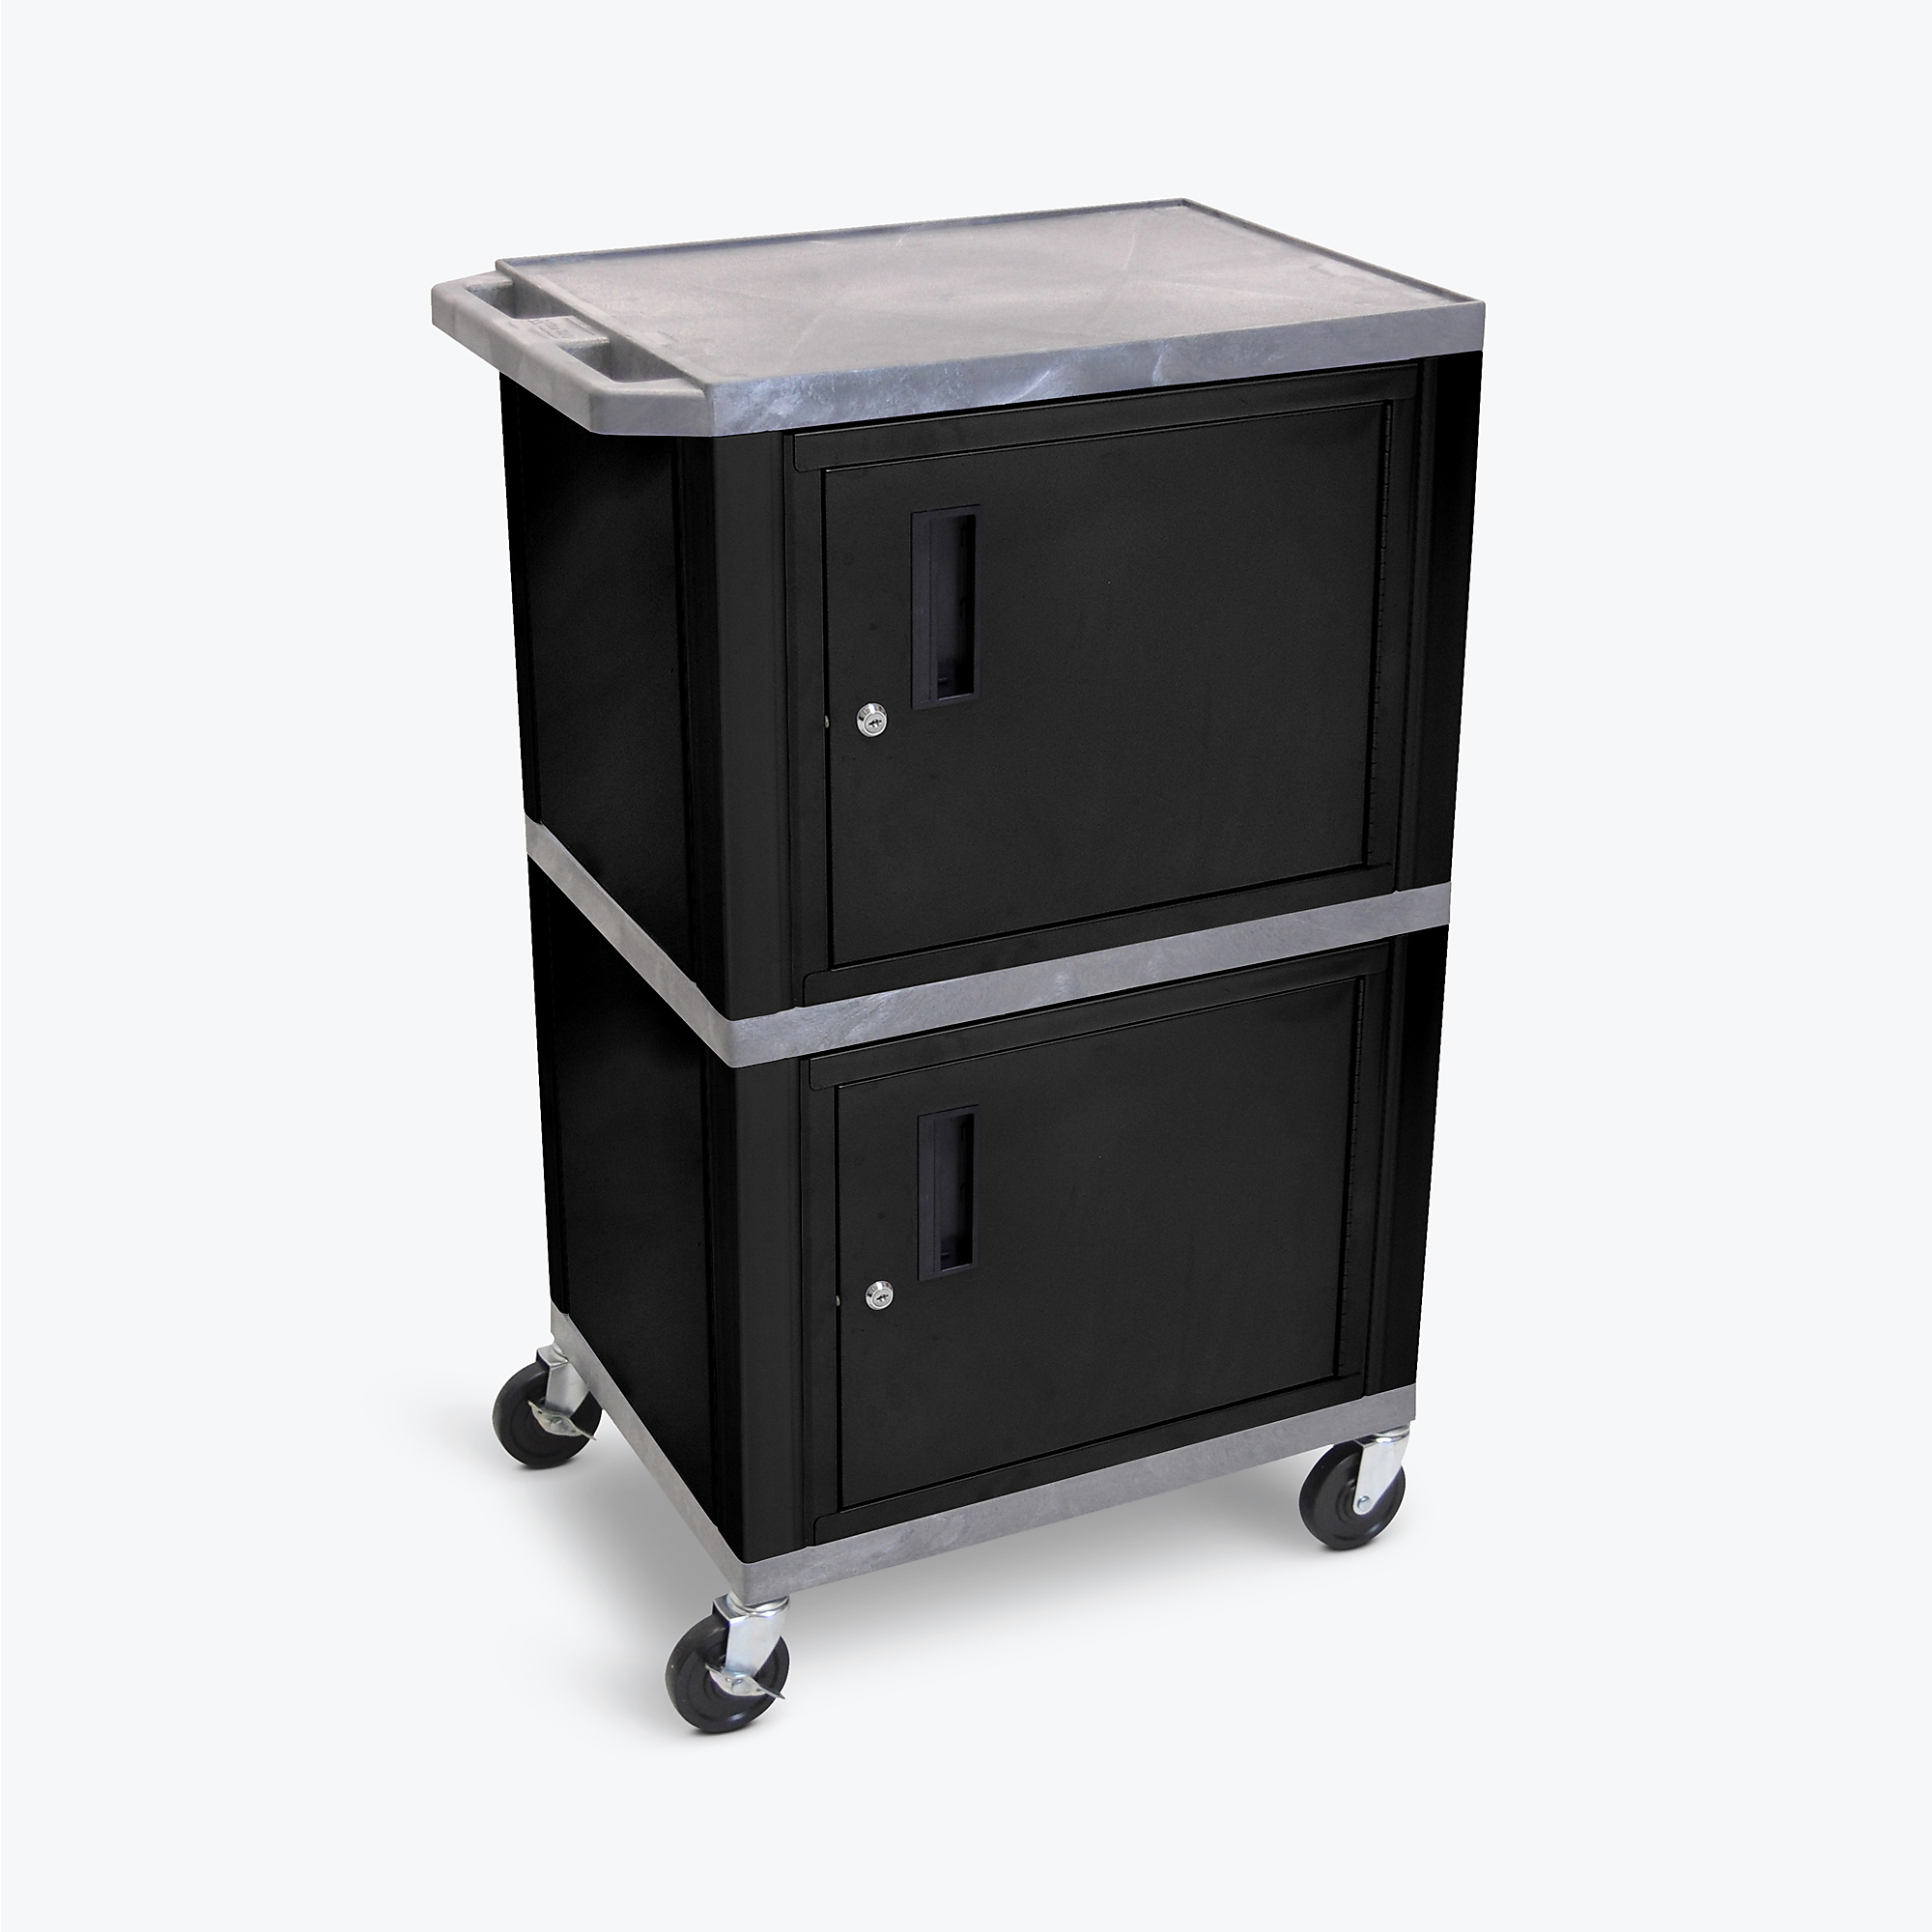 42Inch H Tuffy AV Cart - Double Cabinet, Total Capacity 200 lb, Model - Luxor WT50GY-B